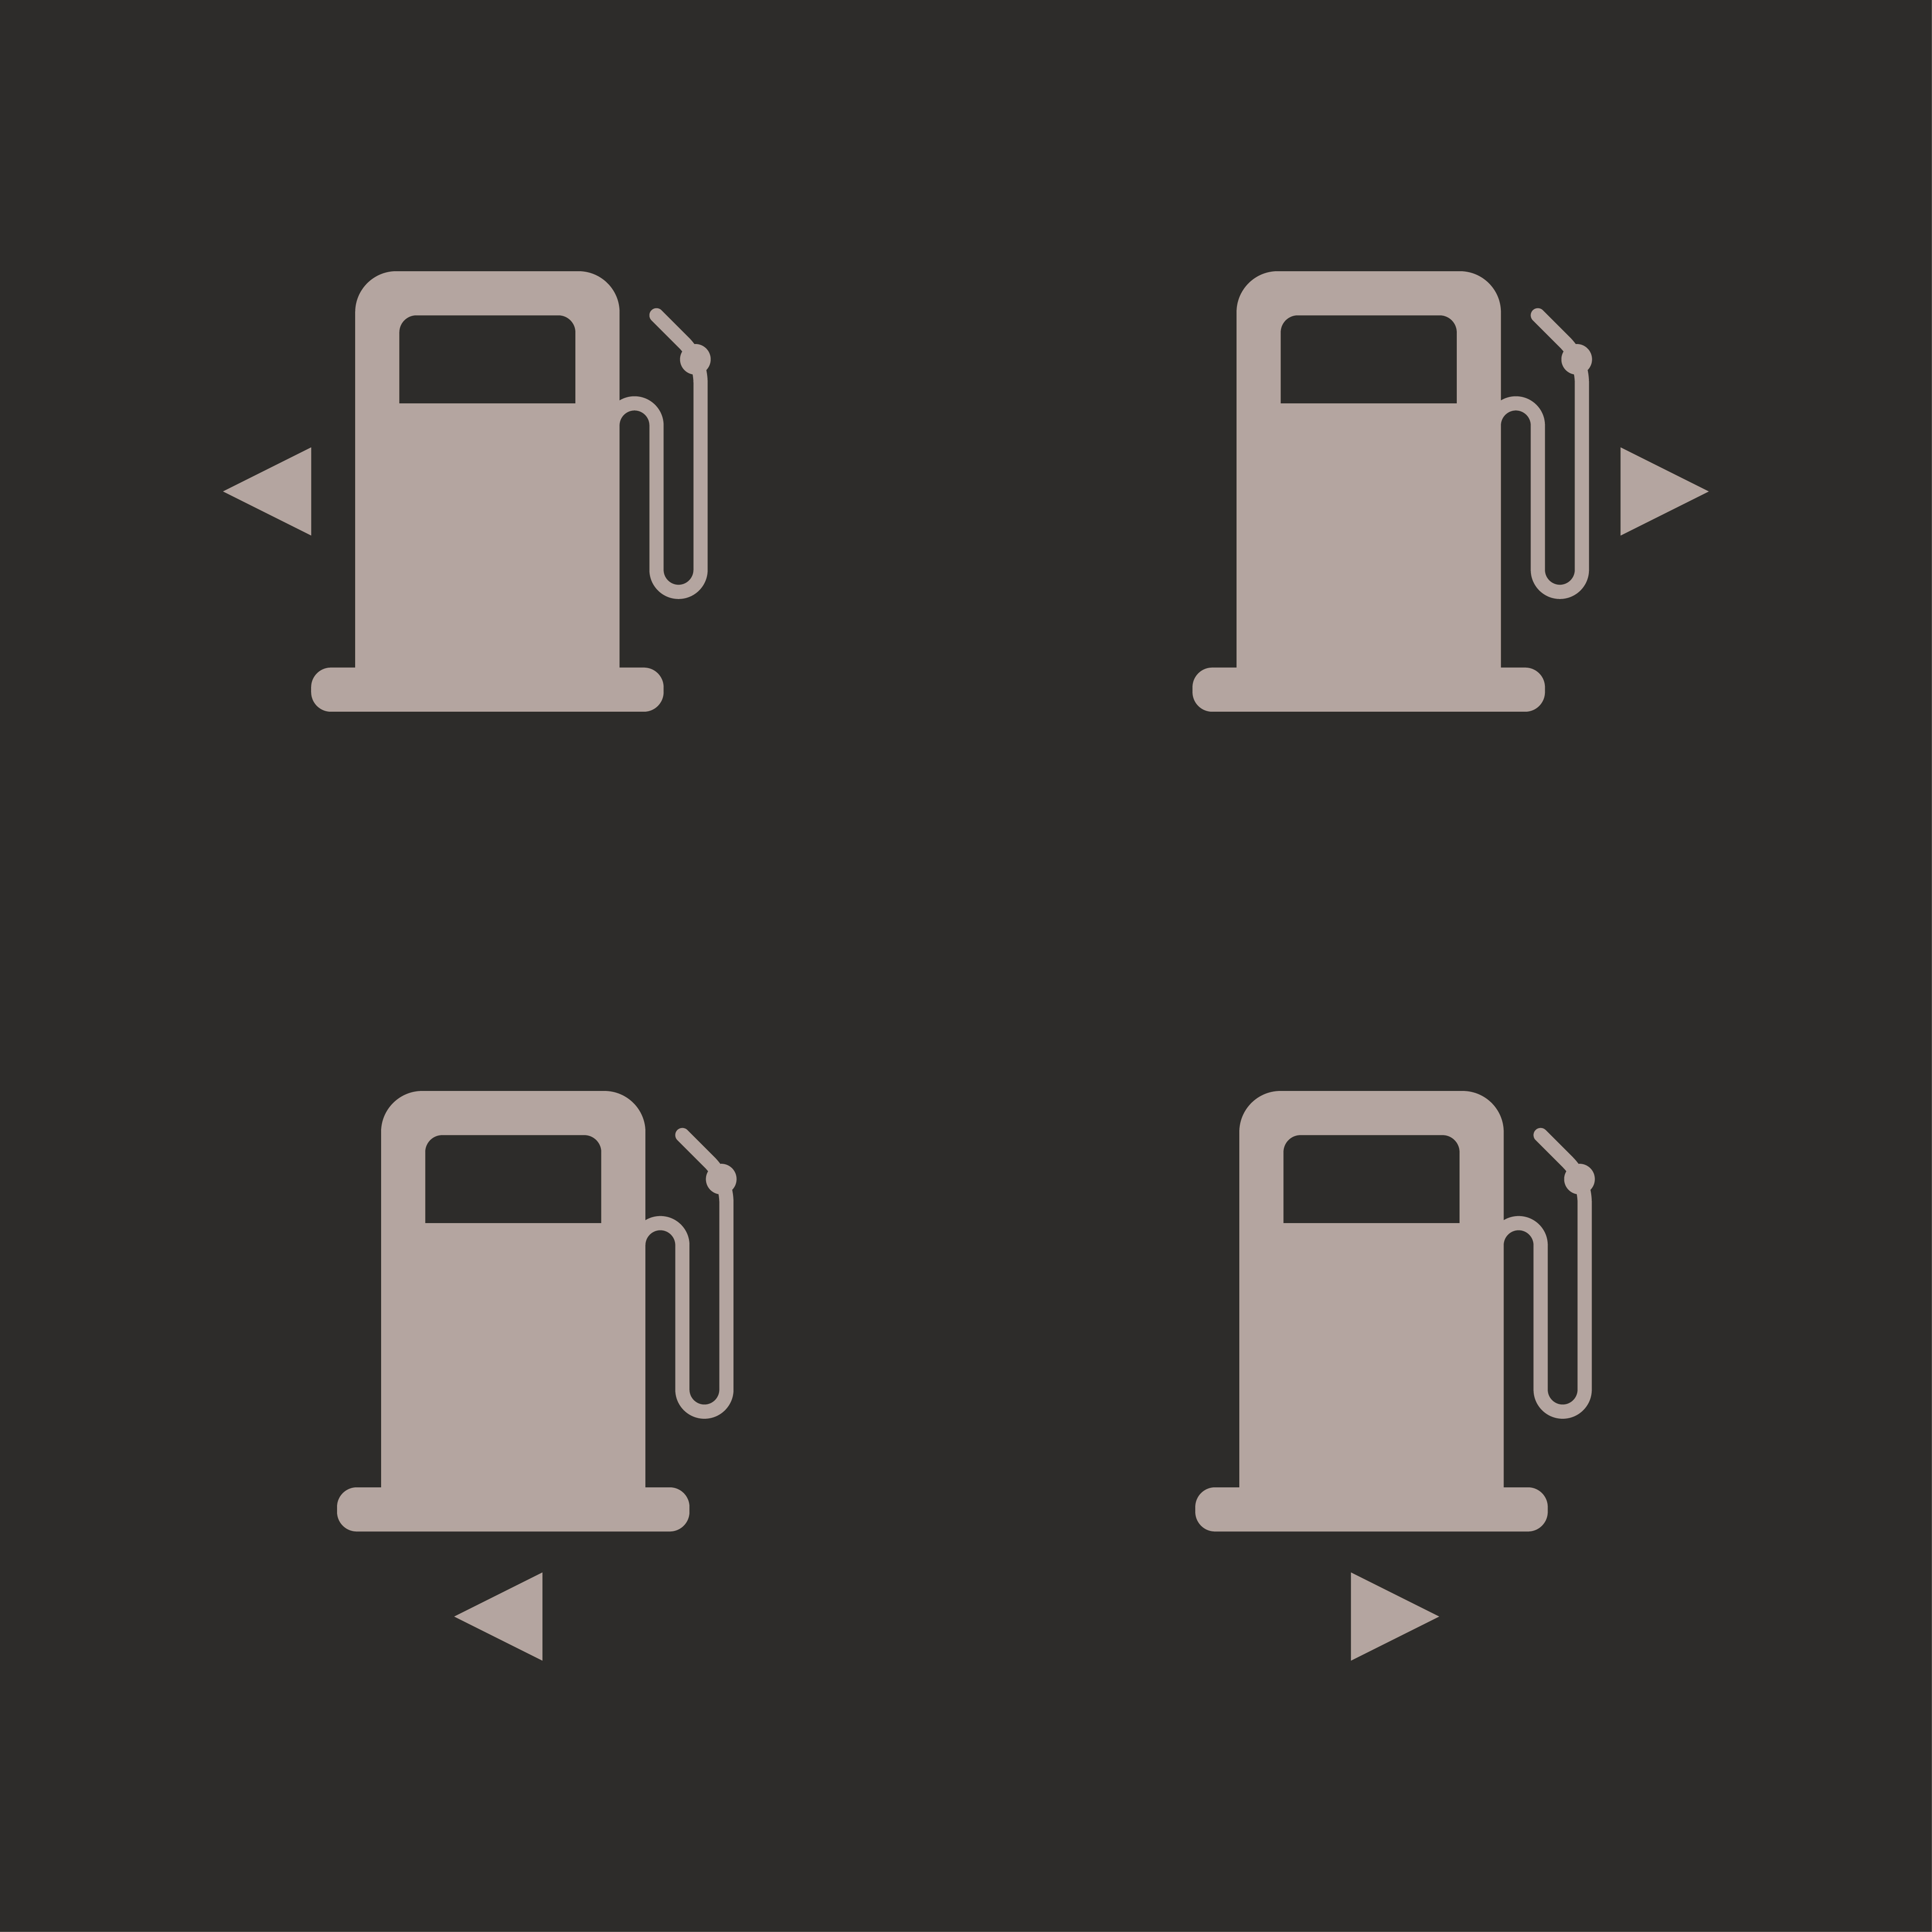 Fuel gas station vector icon. Petrol pump station symbol. Full gasoline sign. Auto car indicator panel illustration